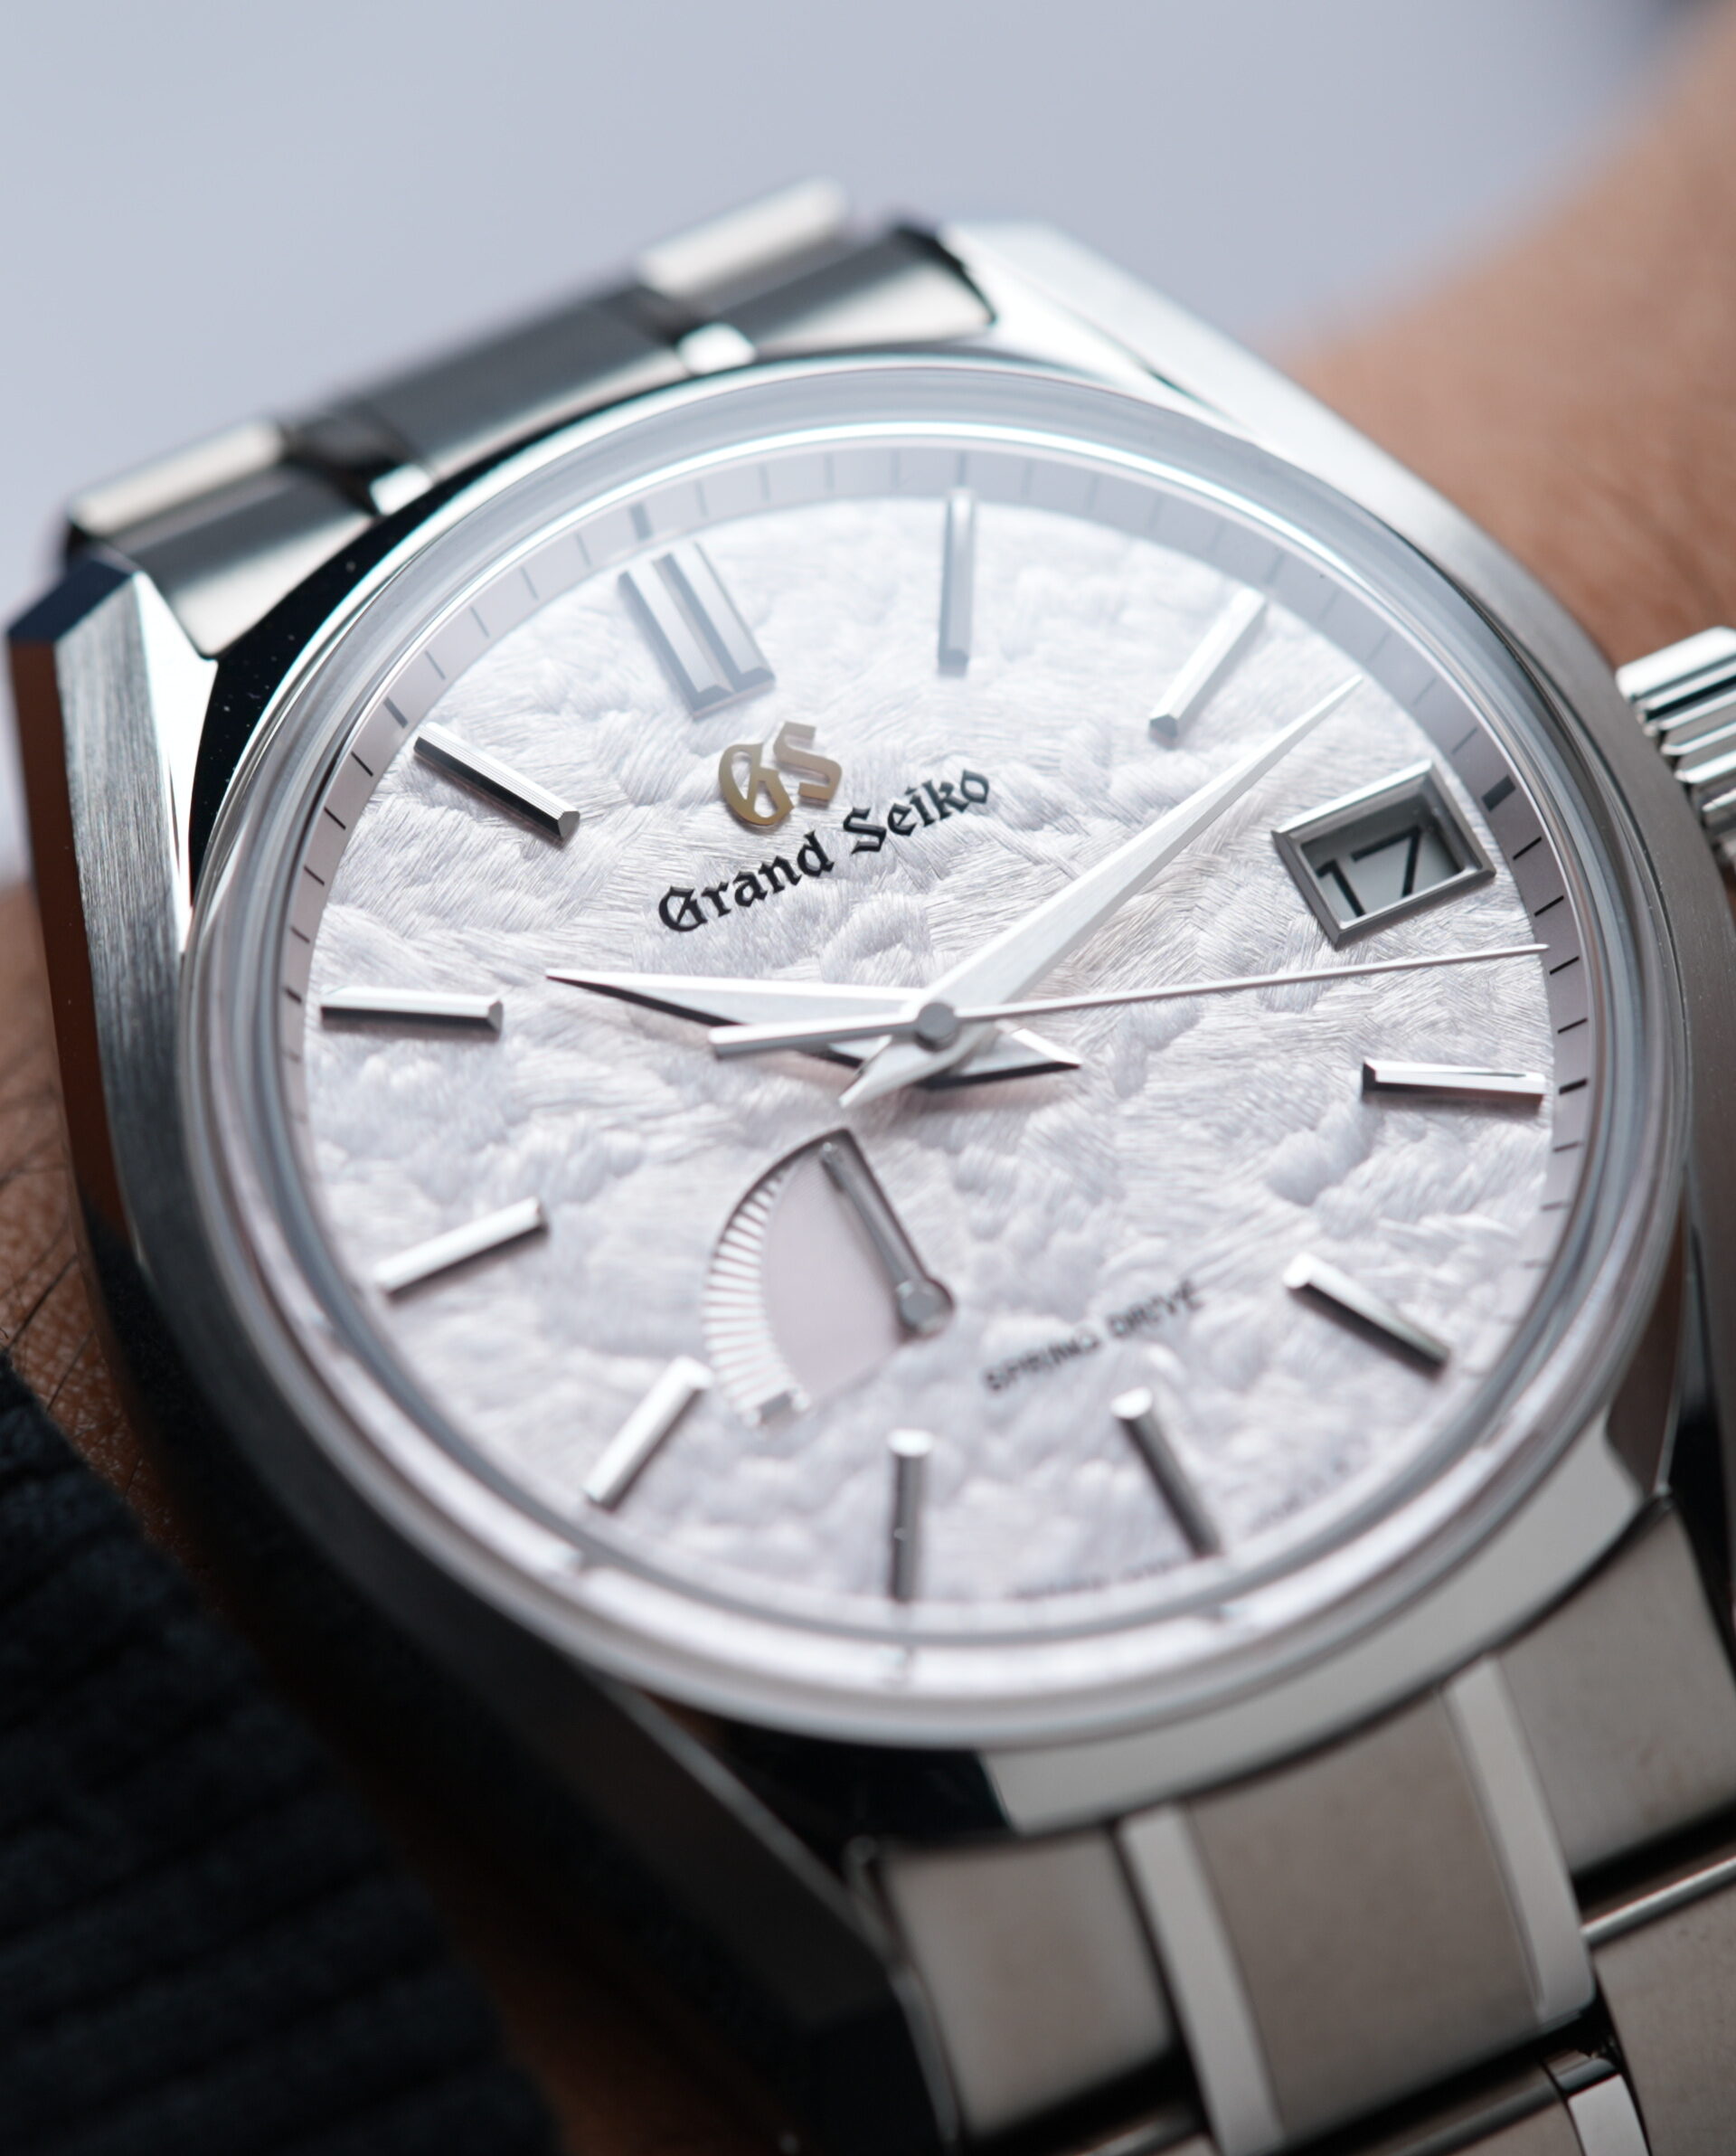 Grand Seiko Heritage Collection Seasons 'Spring' SBGA413 watch displayed on the wrist.